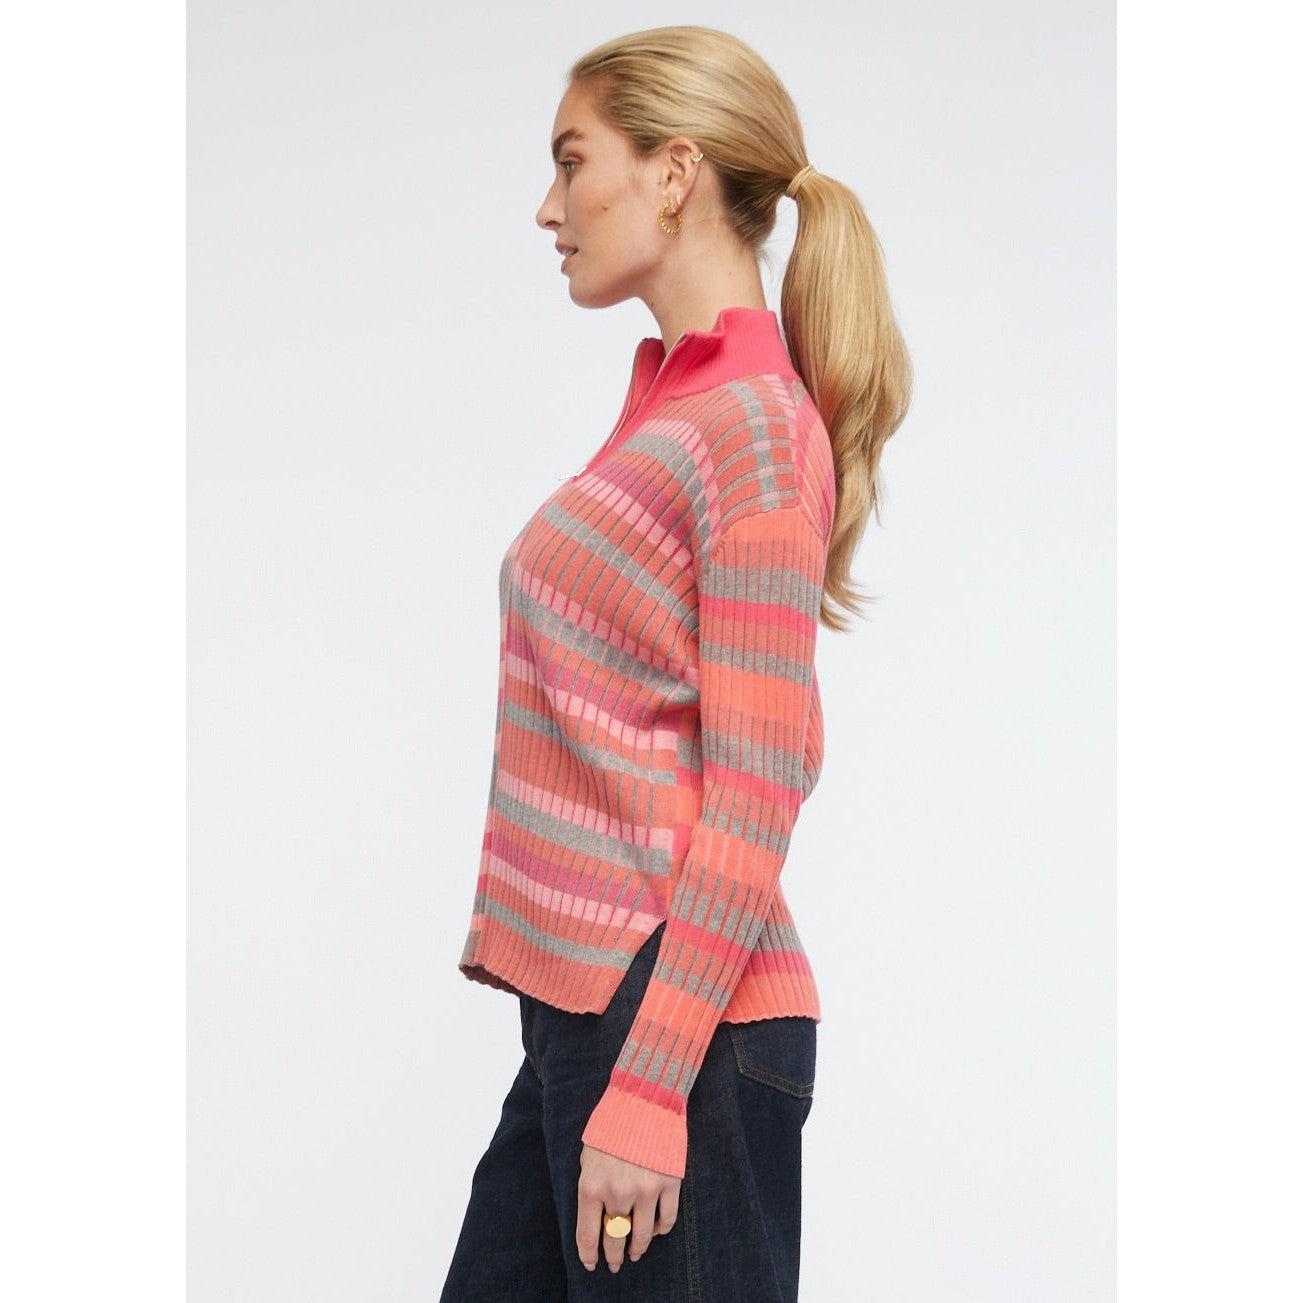 Zaket & Plover Multi Stripe Zip Up-Knitwear-Zaket & Plover-Après-She